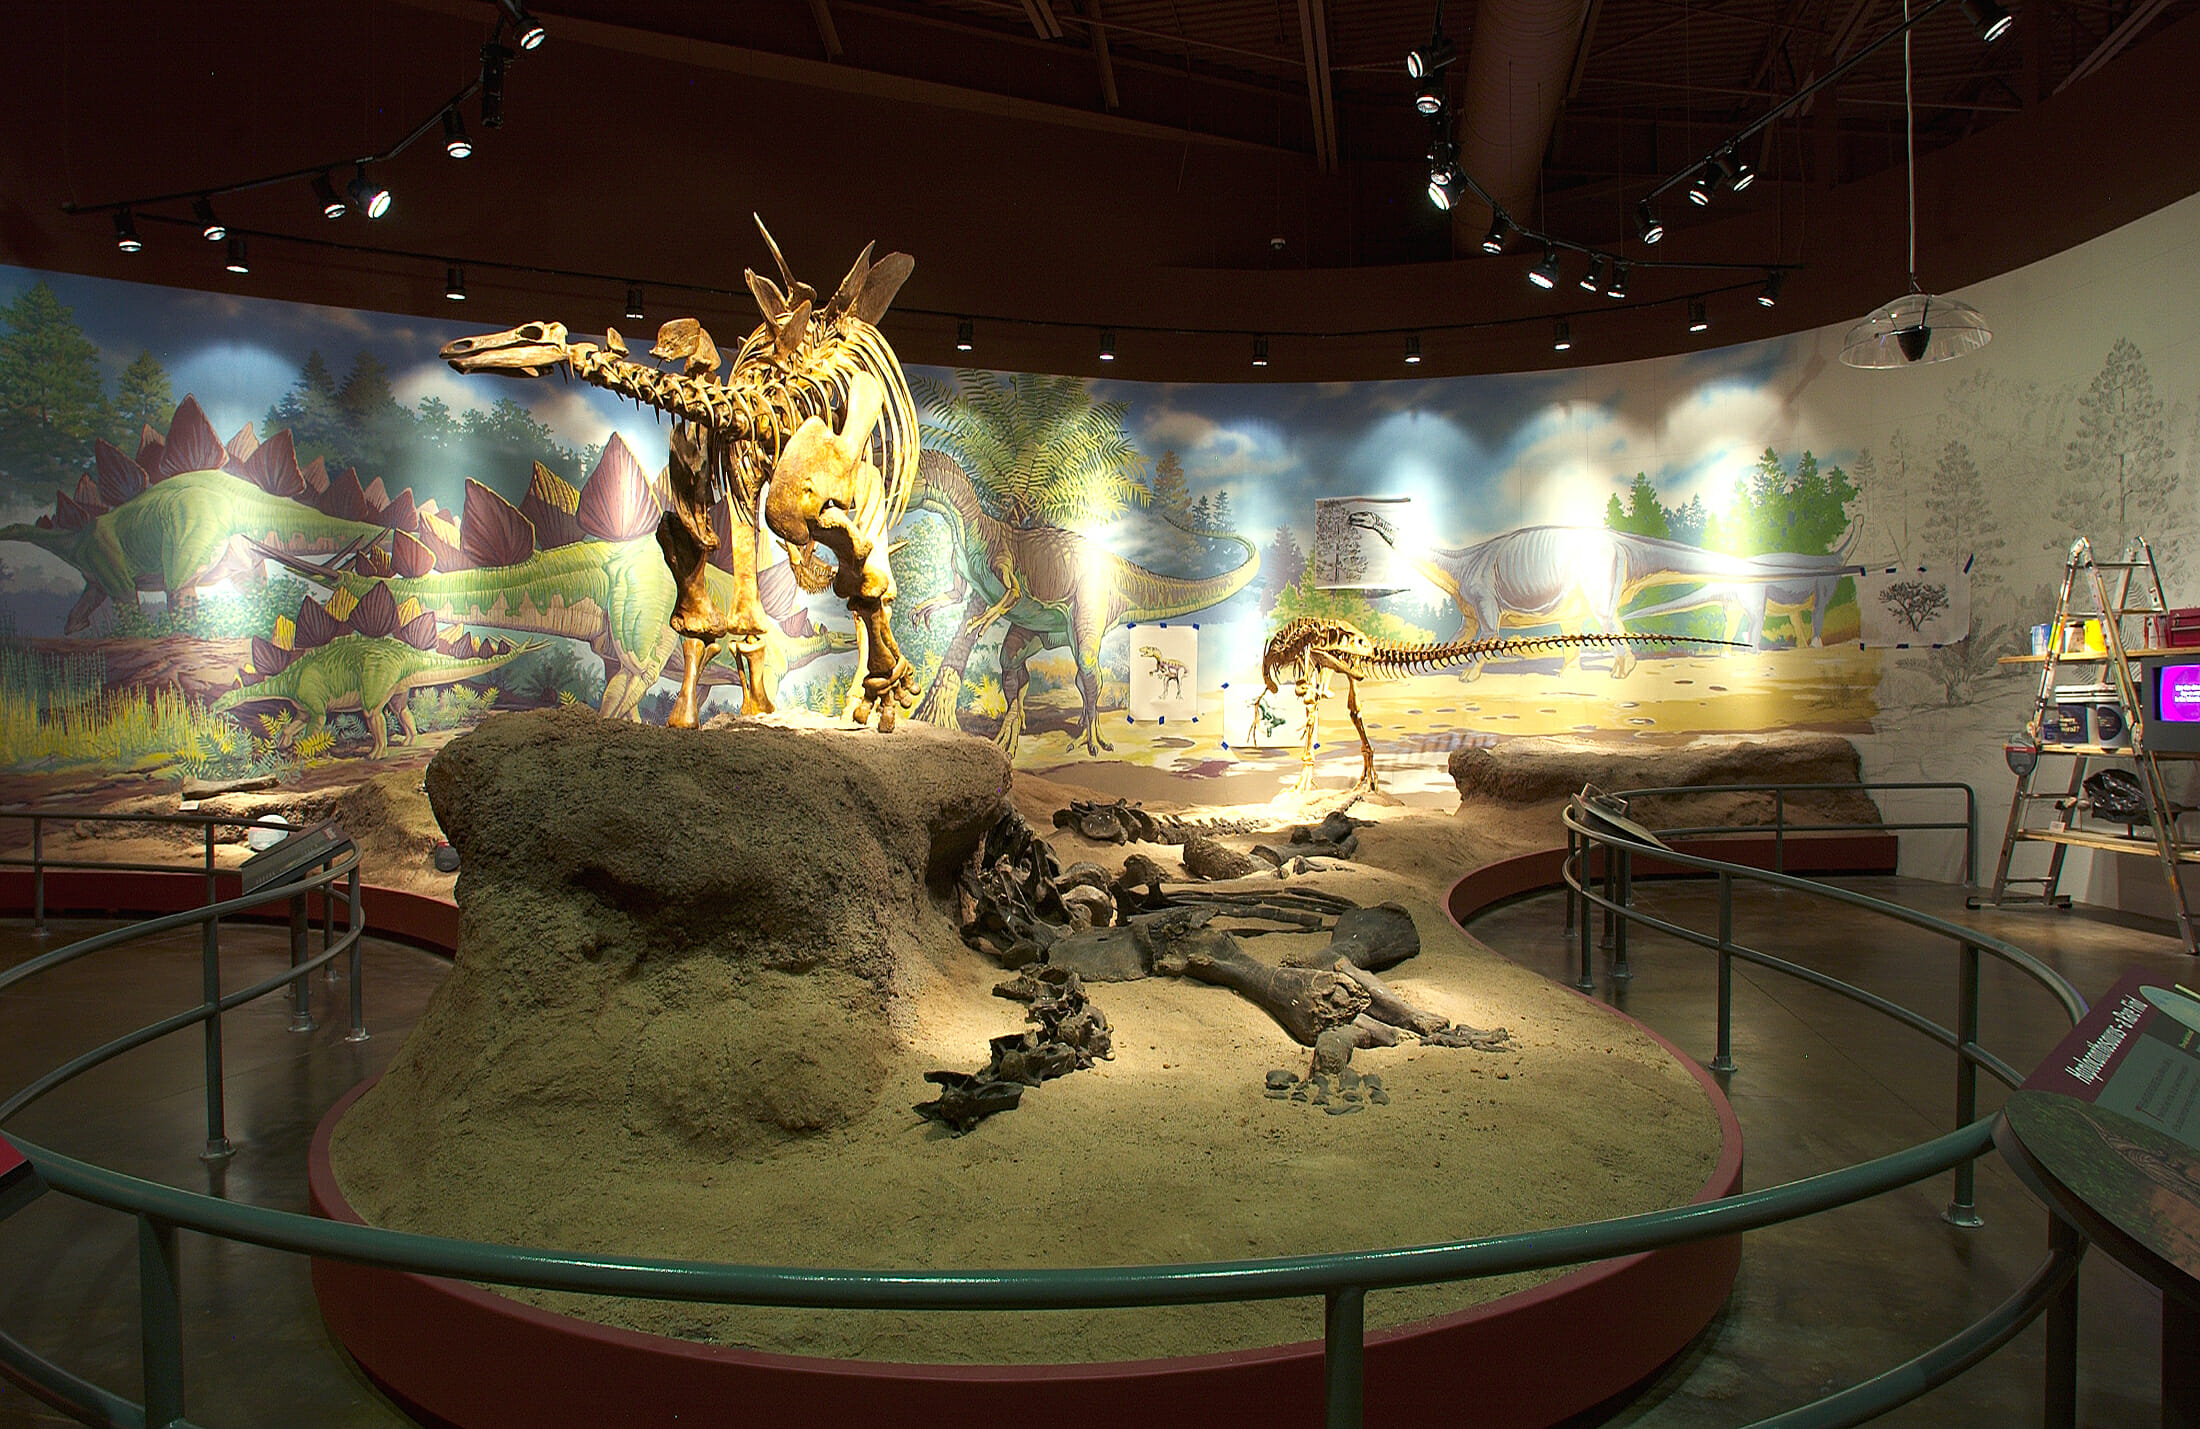 fieldhouse museum Stegsaurus